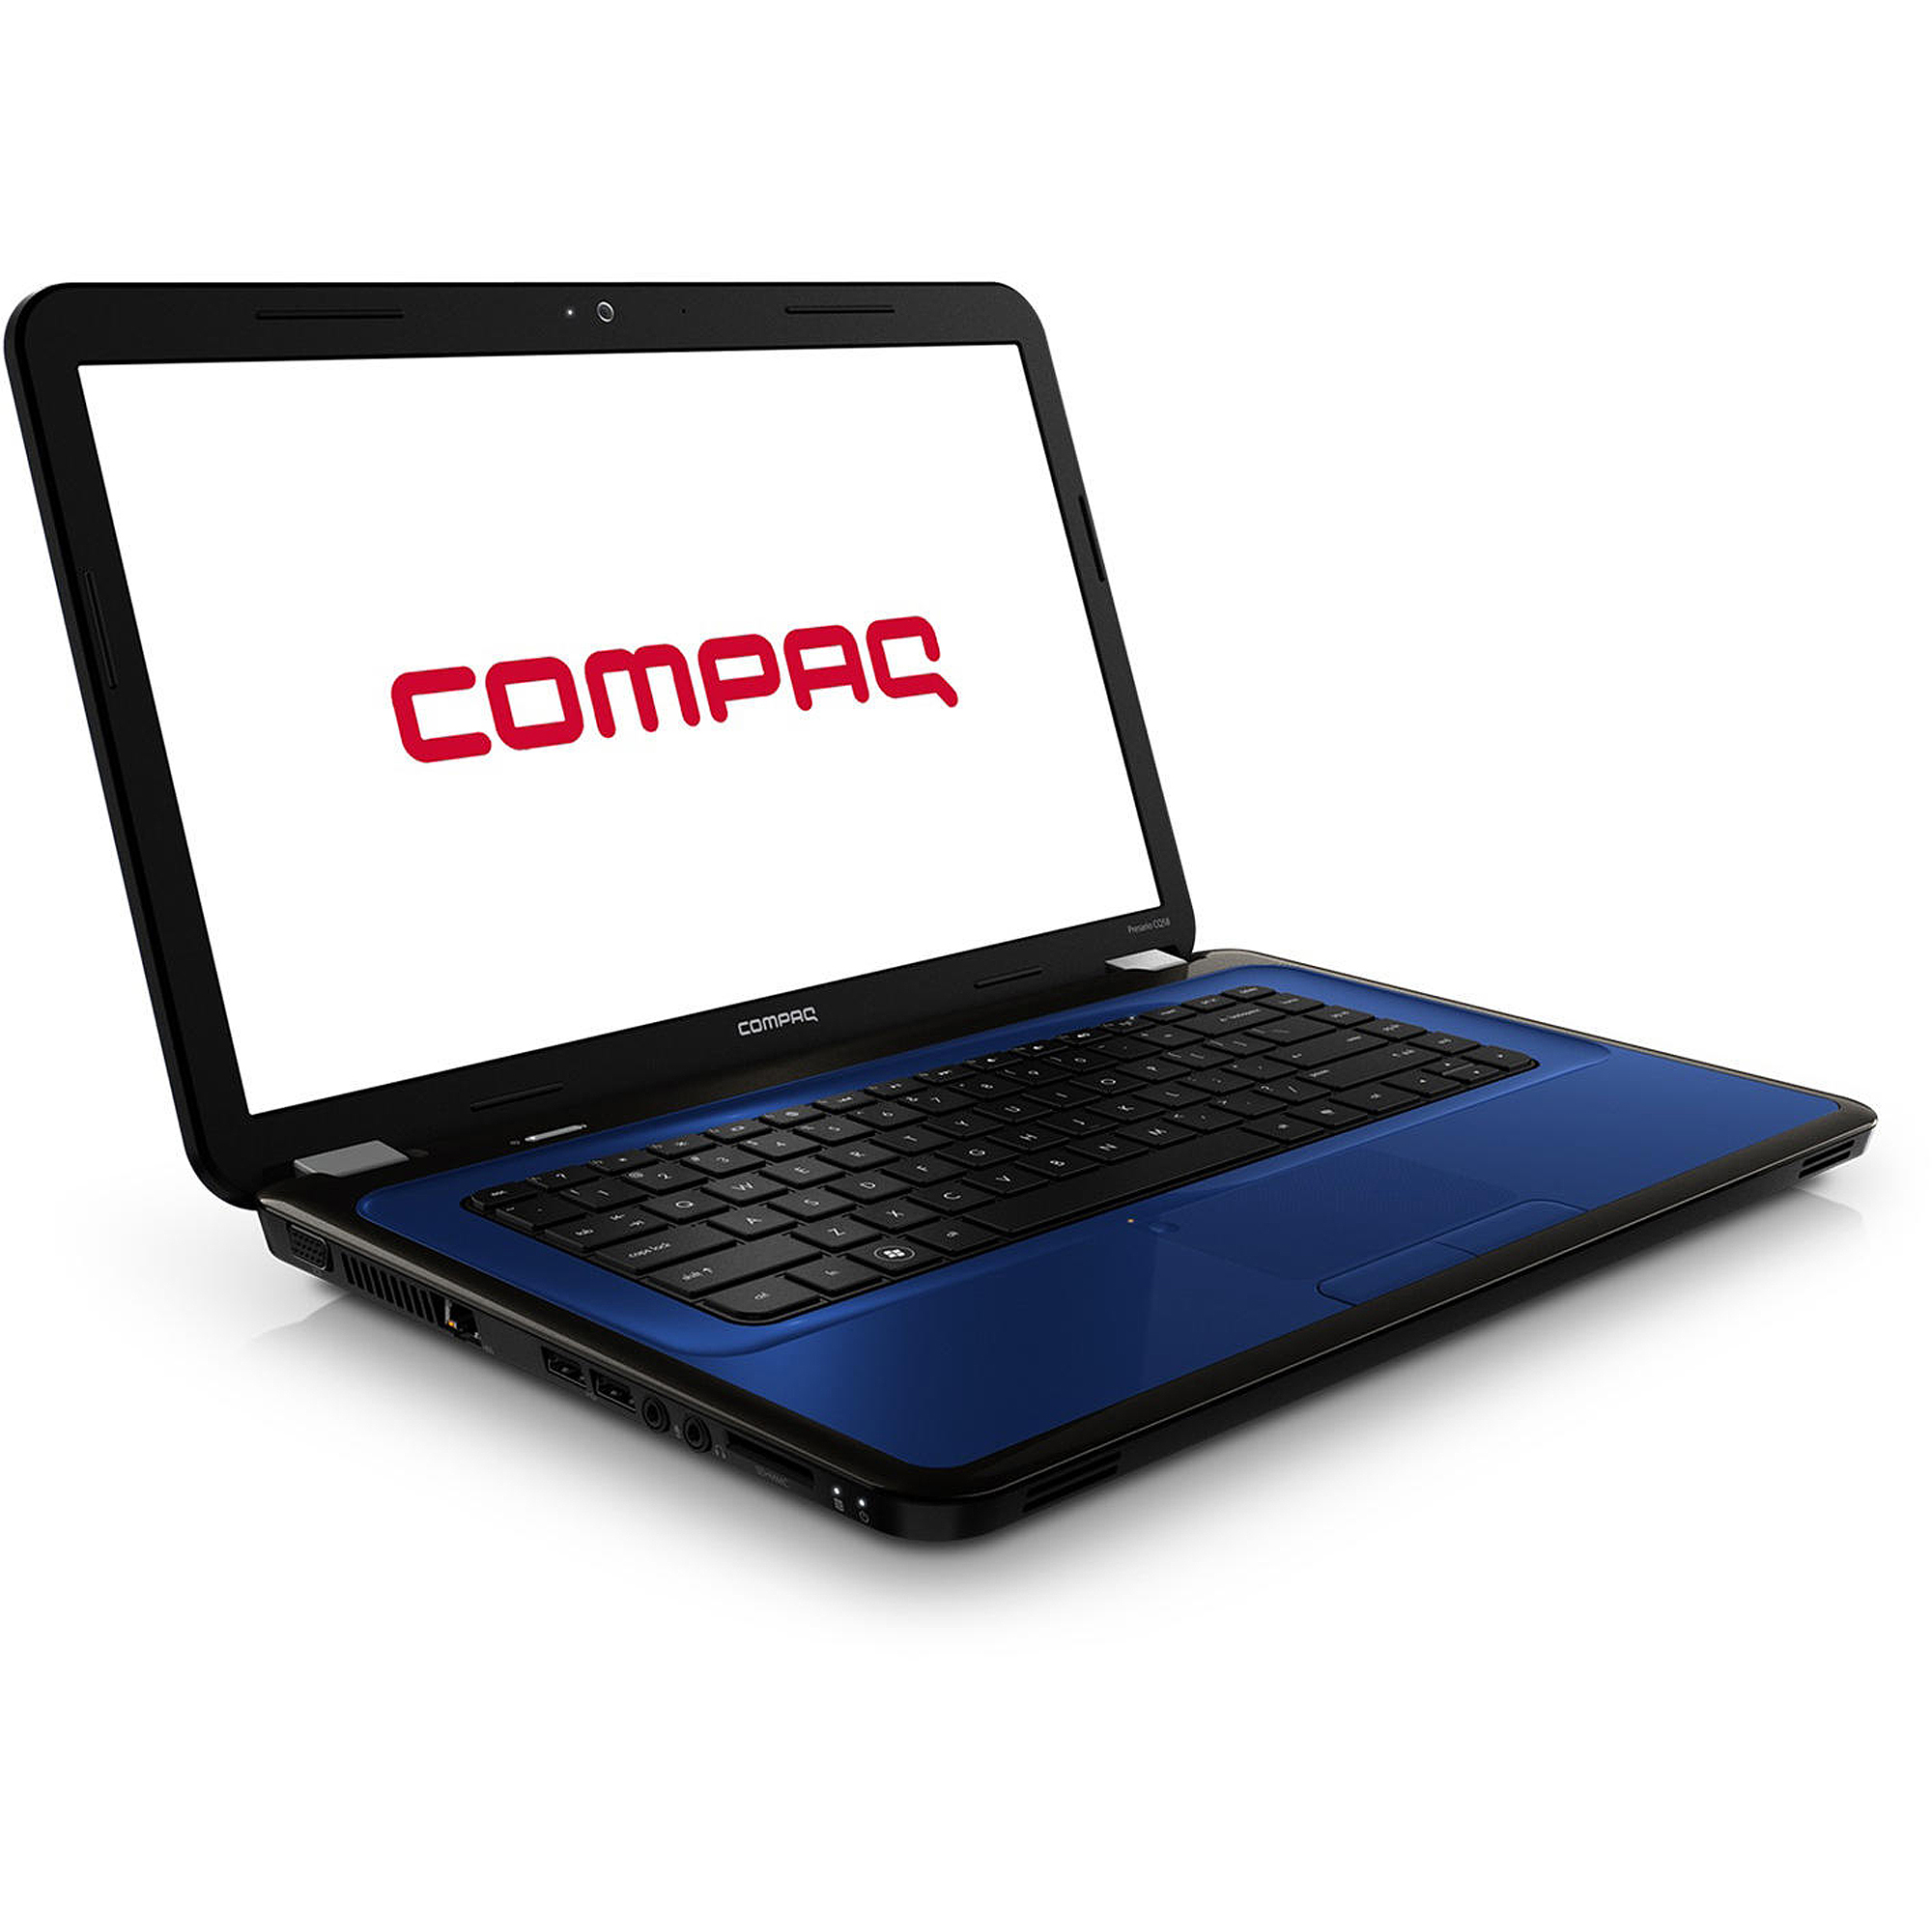 Restored Compaq Pacific Blue 15.6" CQ58-bf9WM Laptop PC with AMD Dual-Core C-80 Processor, 2GB Memory, 320GB Hard Drive and Windows 8 (Refurbished) - image 2 of 4